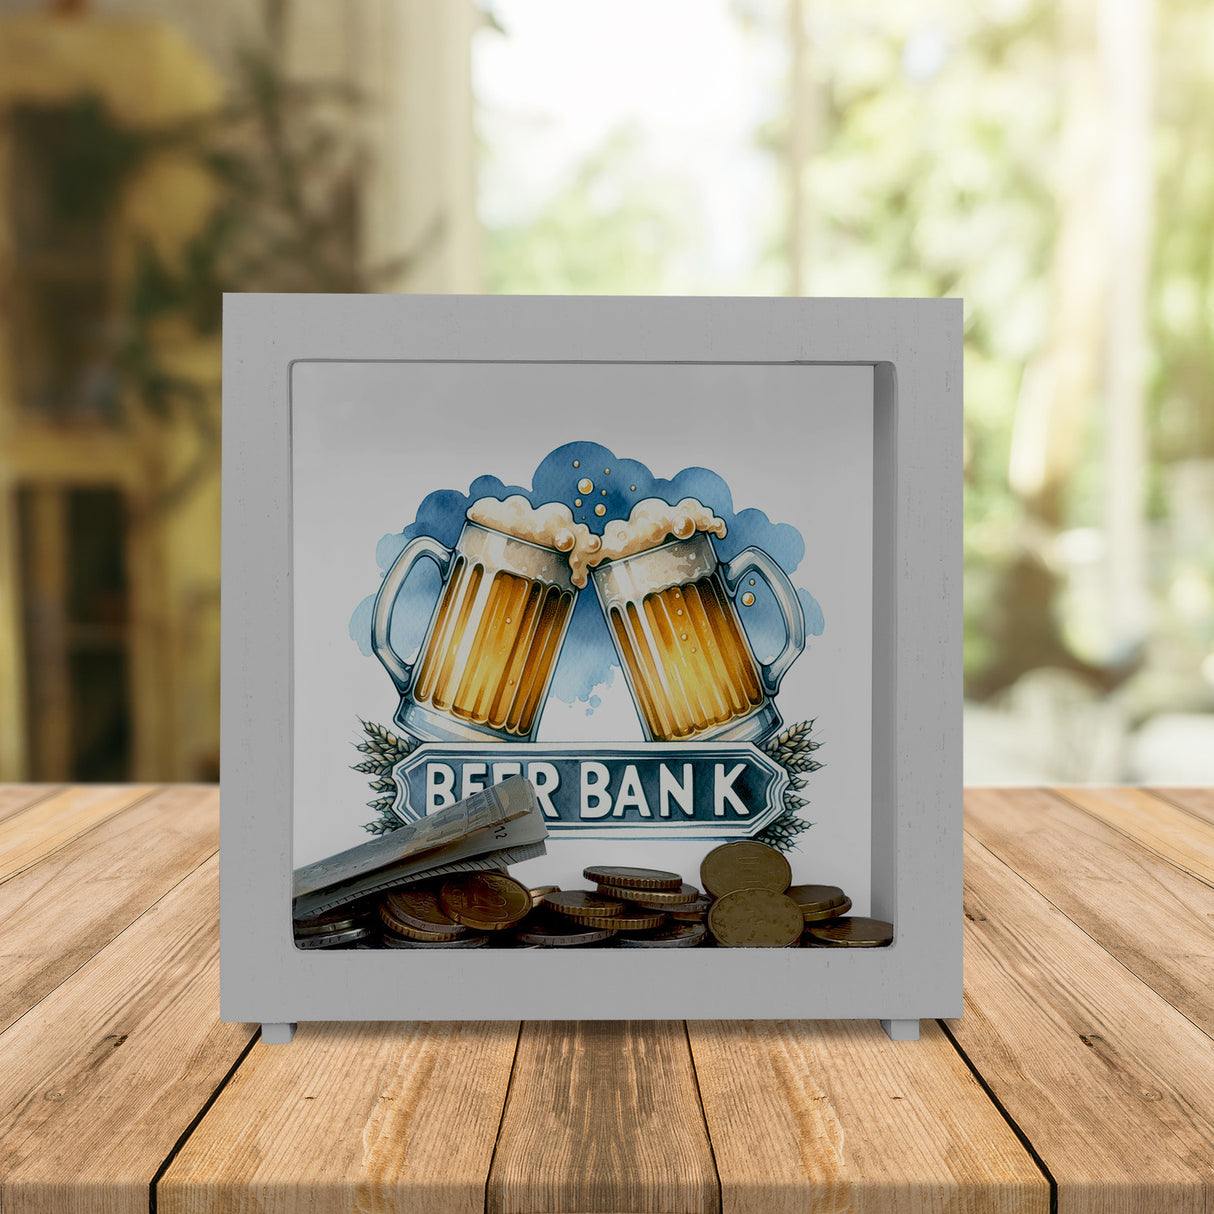 Bier Spardose mit Spruch Beer Bank